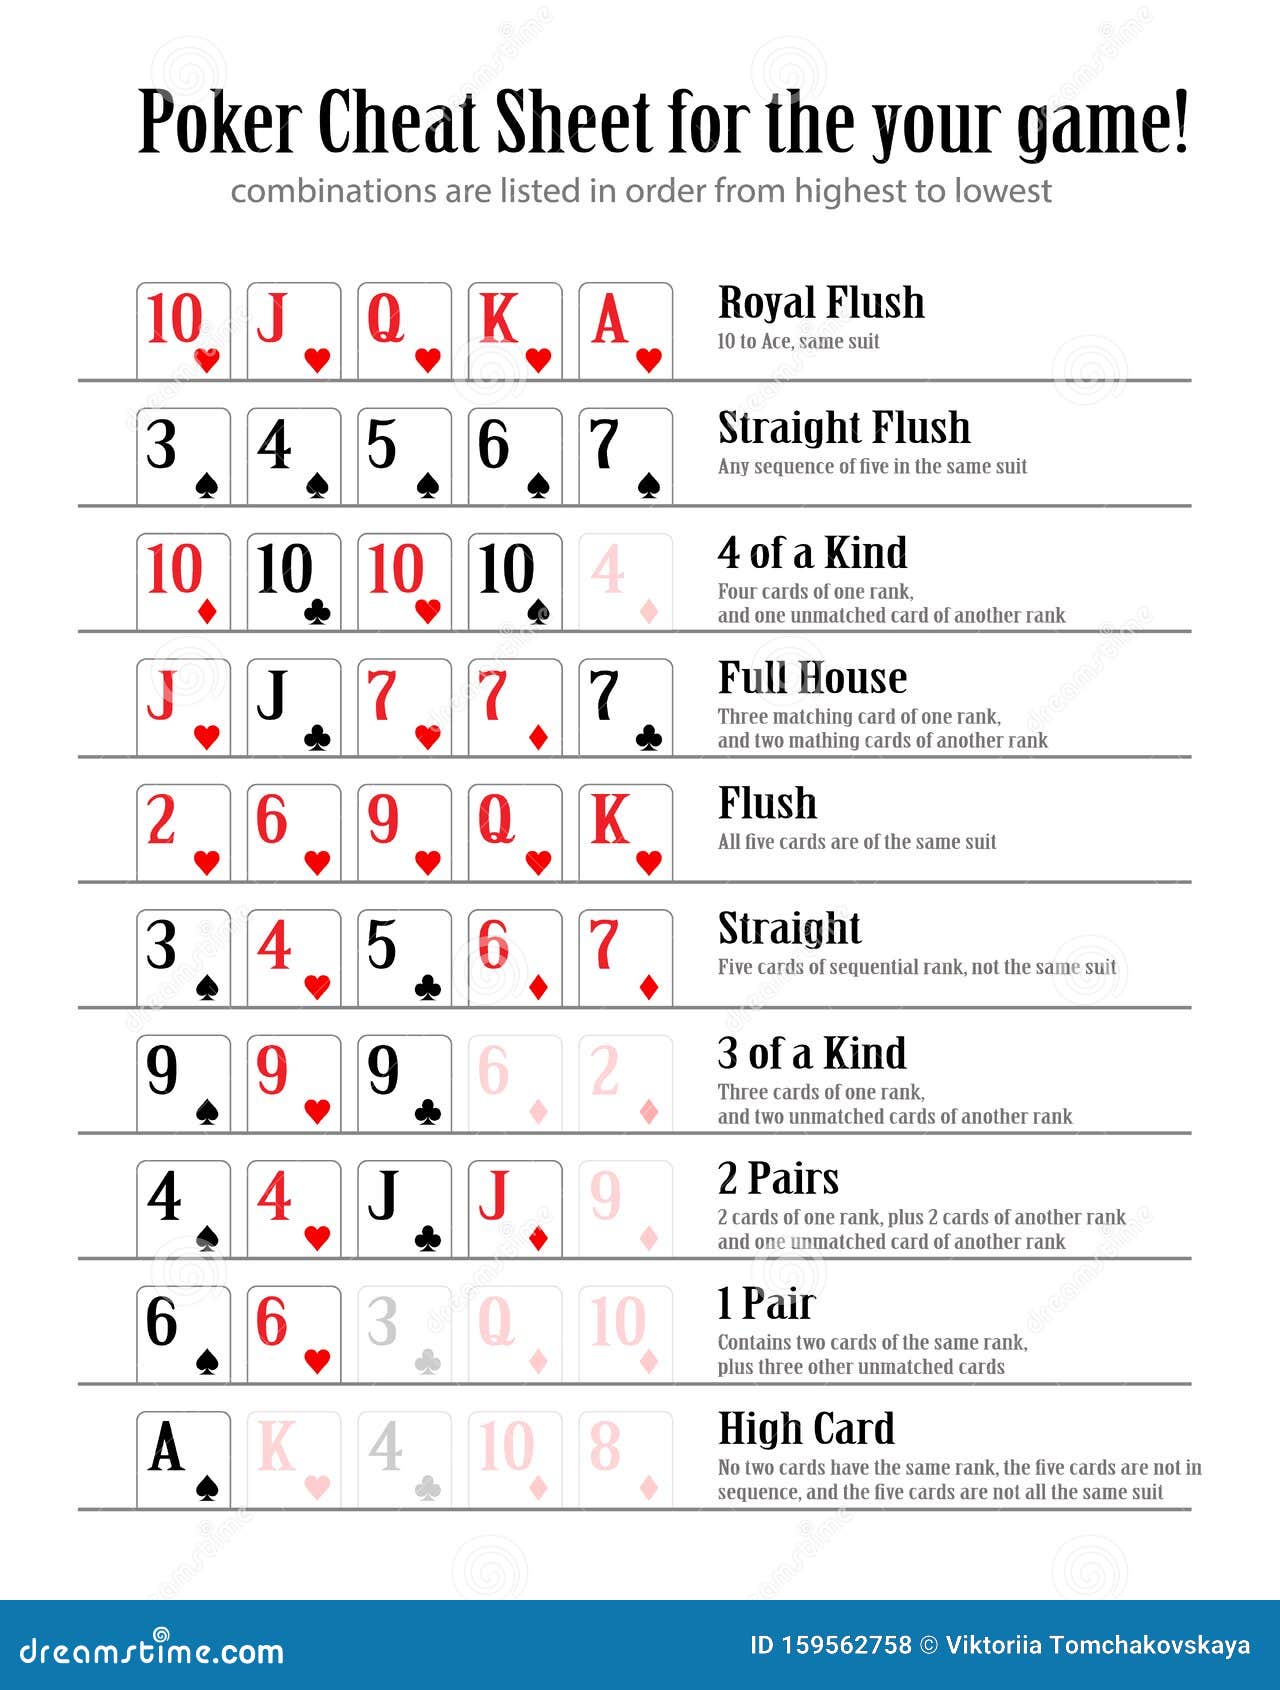 Poker Hands Cheat Sheet Printable